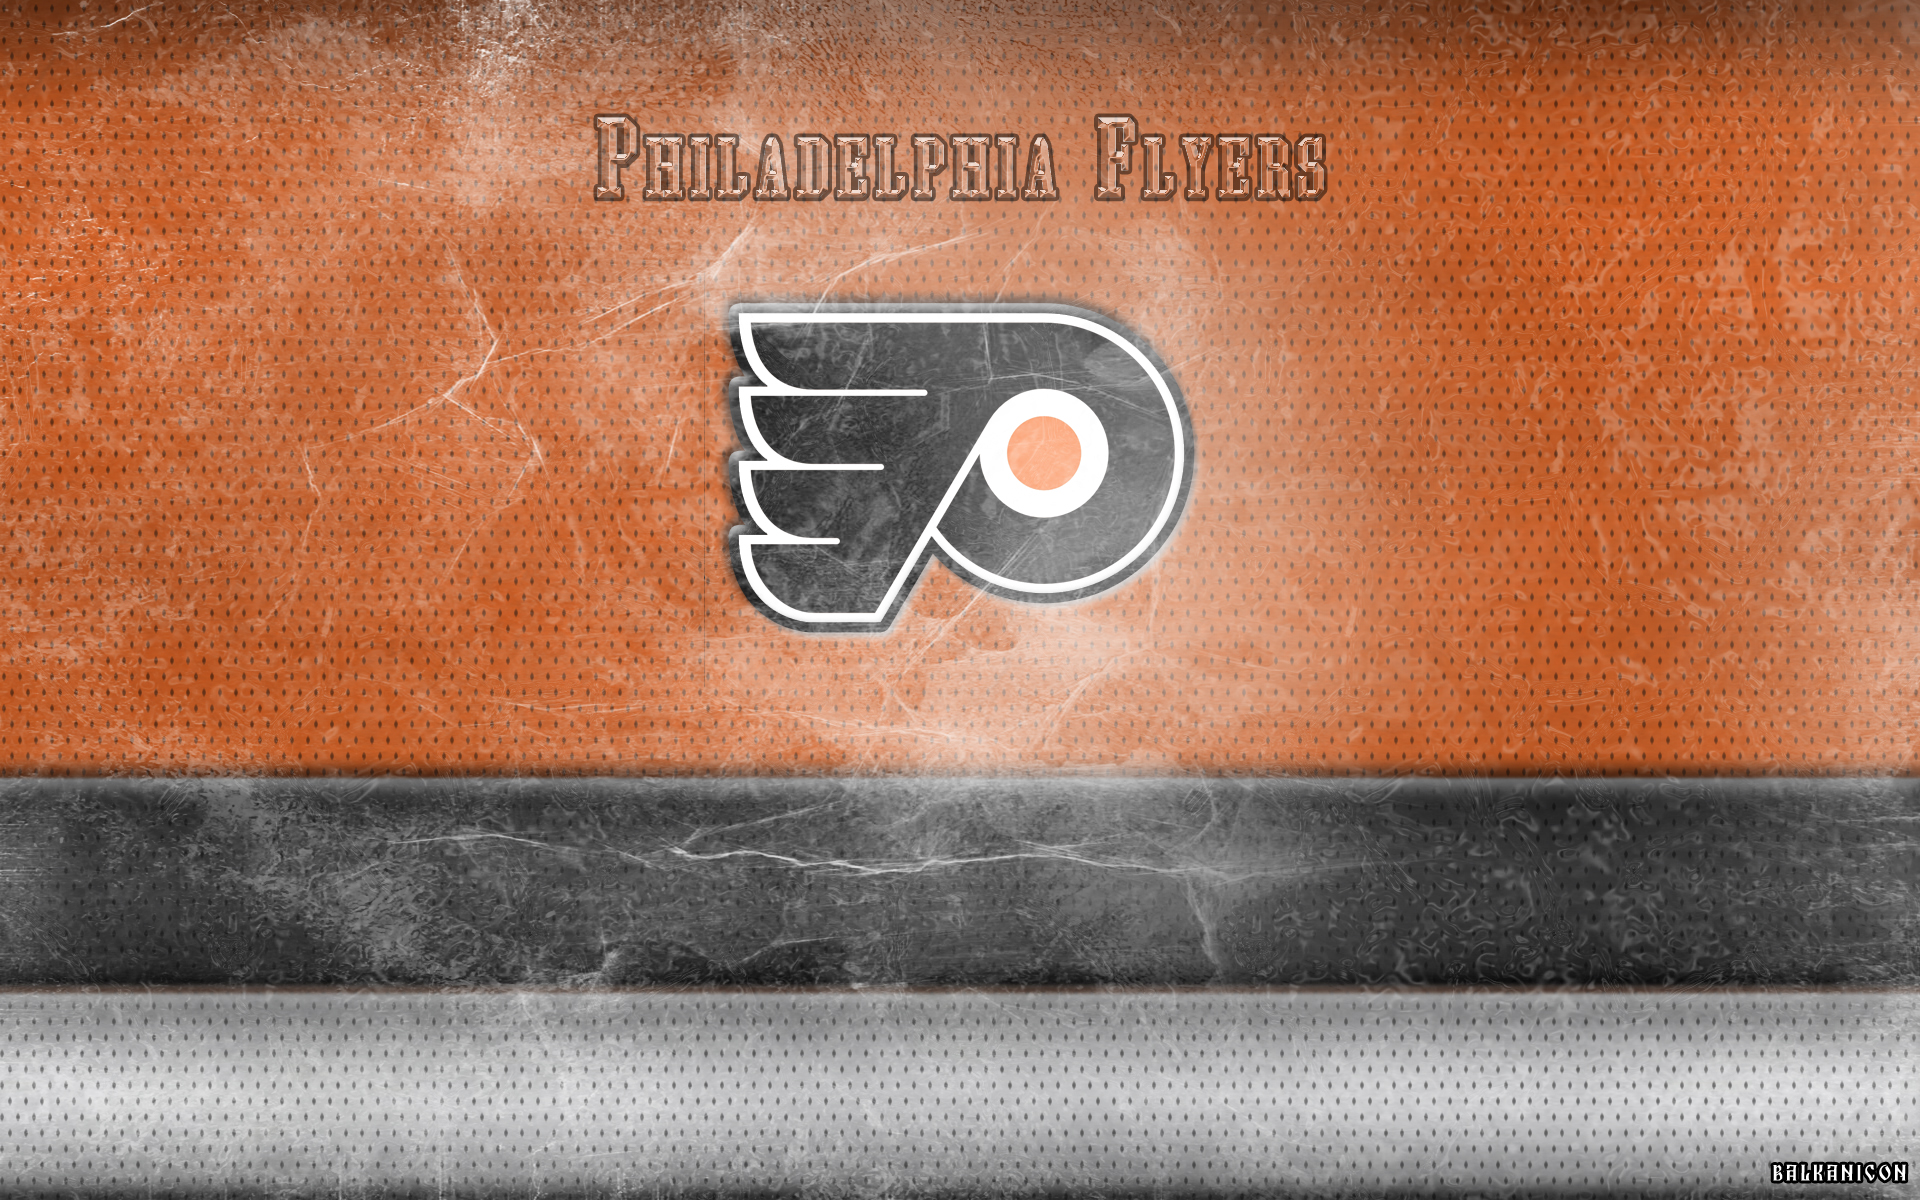 Philadelphia Flyers by cdbvulpix on deviantART